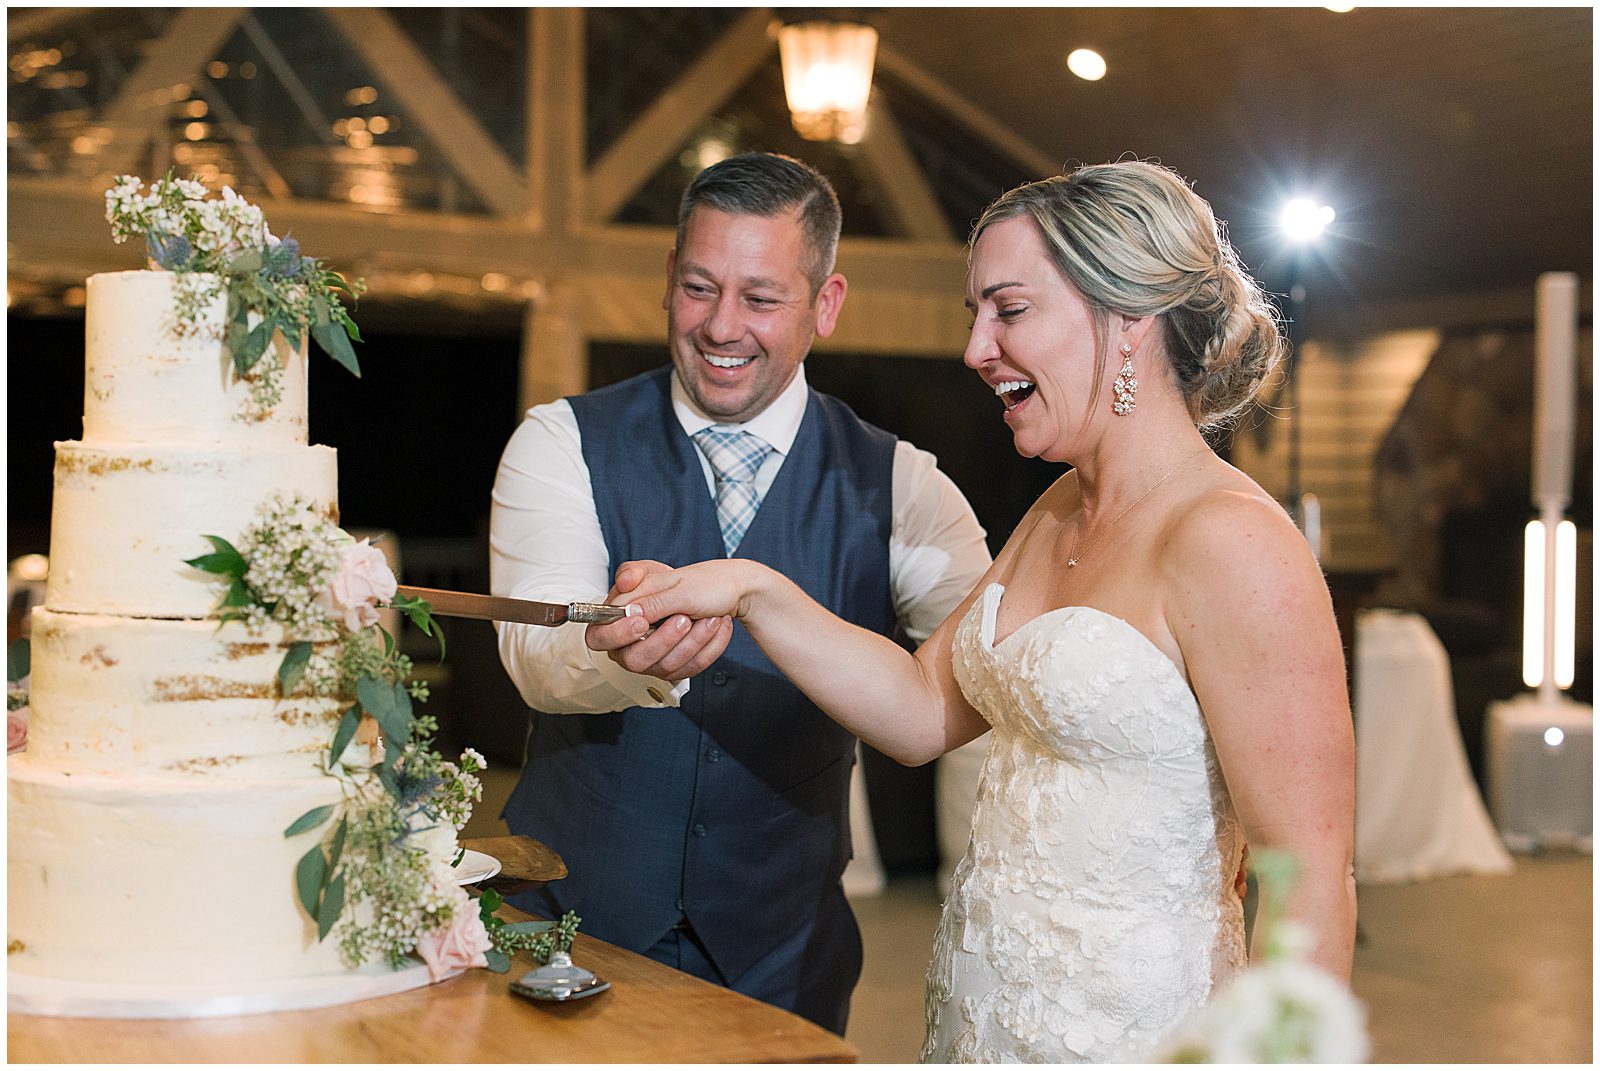 Bride and Groom Cutting Wedding Cake Photo